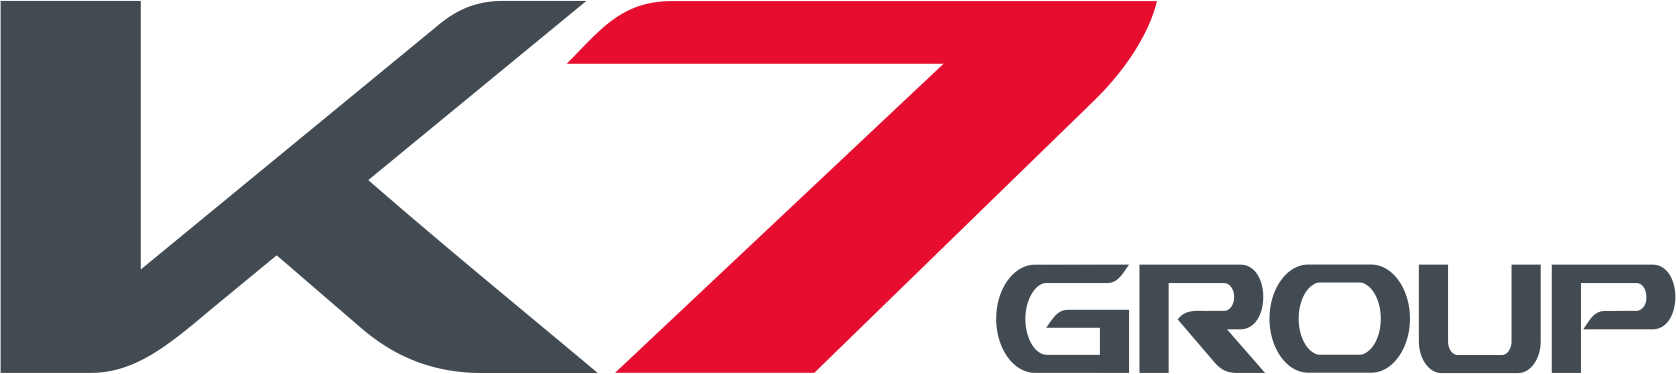 Группа k 7. Актобе k7 Group. K7 Group Алматы. K7 Group logo. Группа 7 логотип.